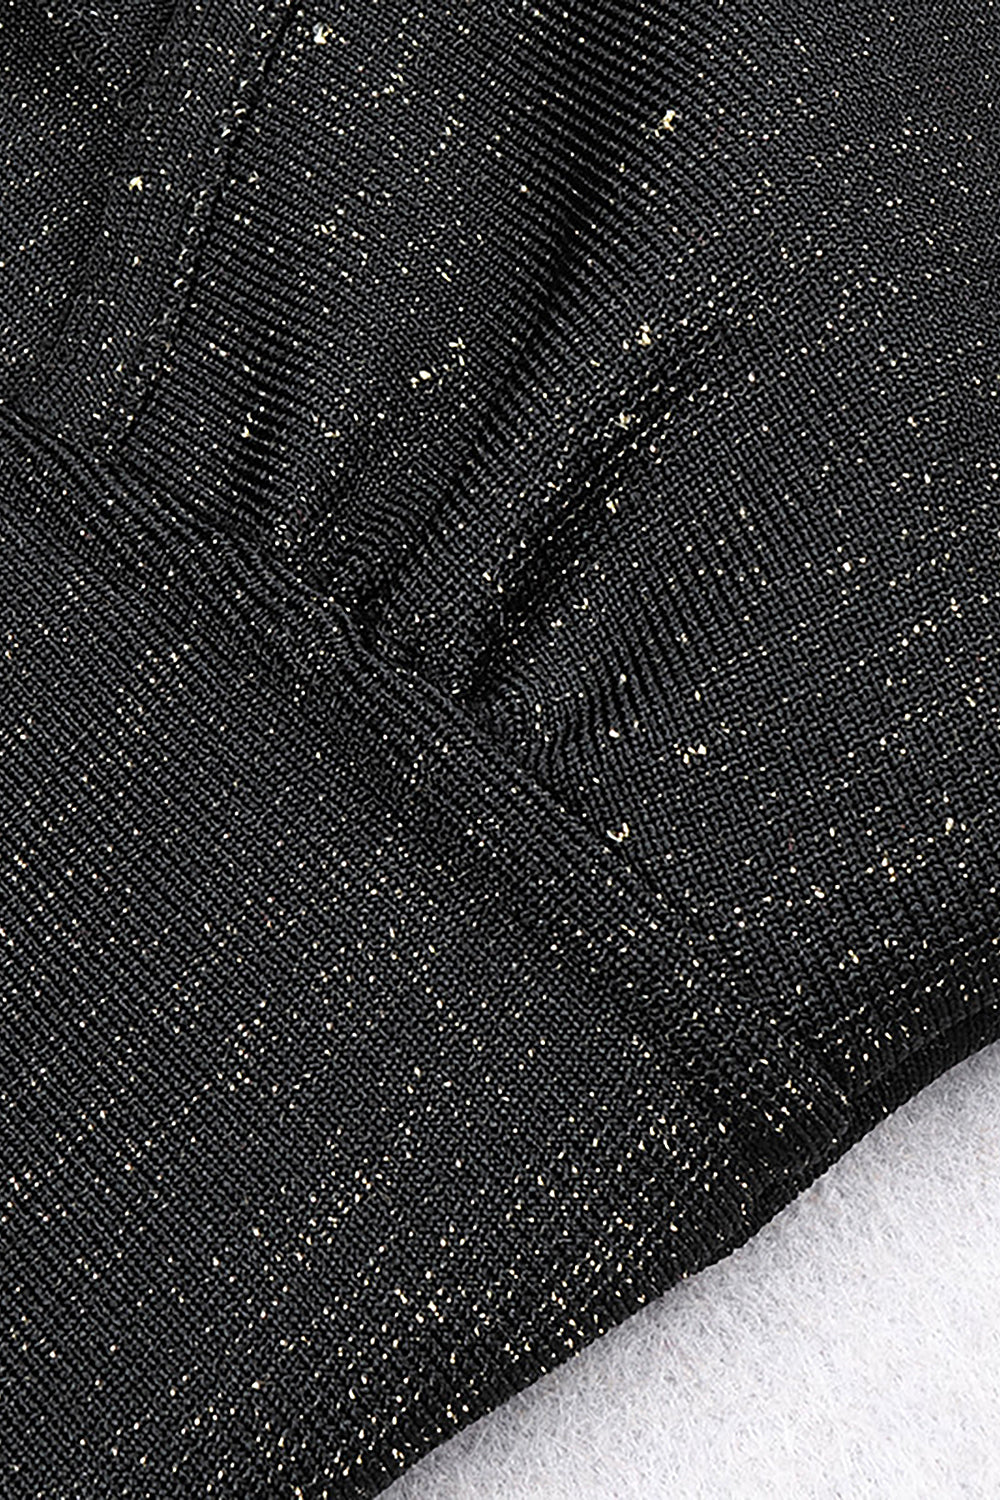 Next-level One-Shouldered Gold Thread Bandage Jumpsuit